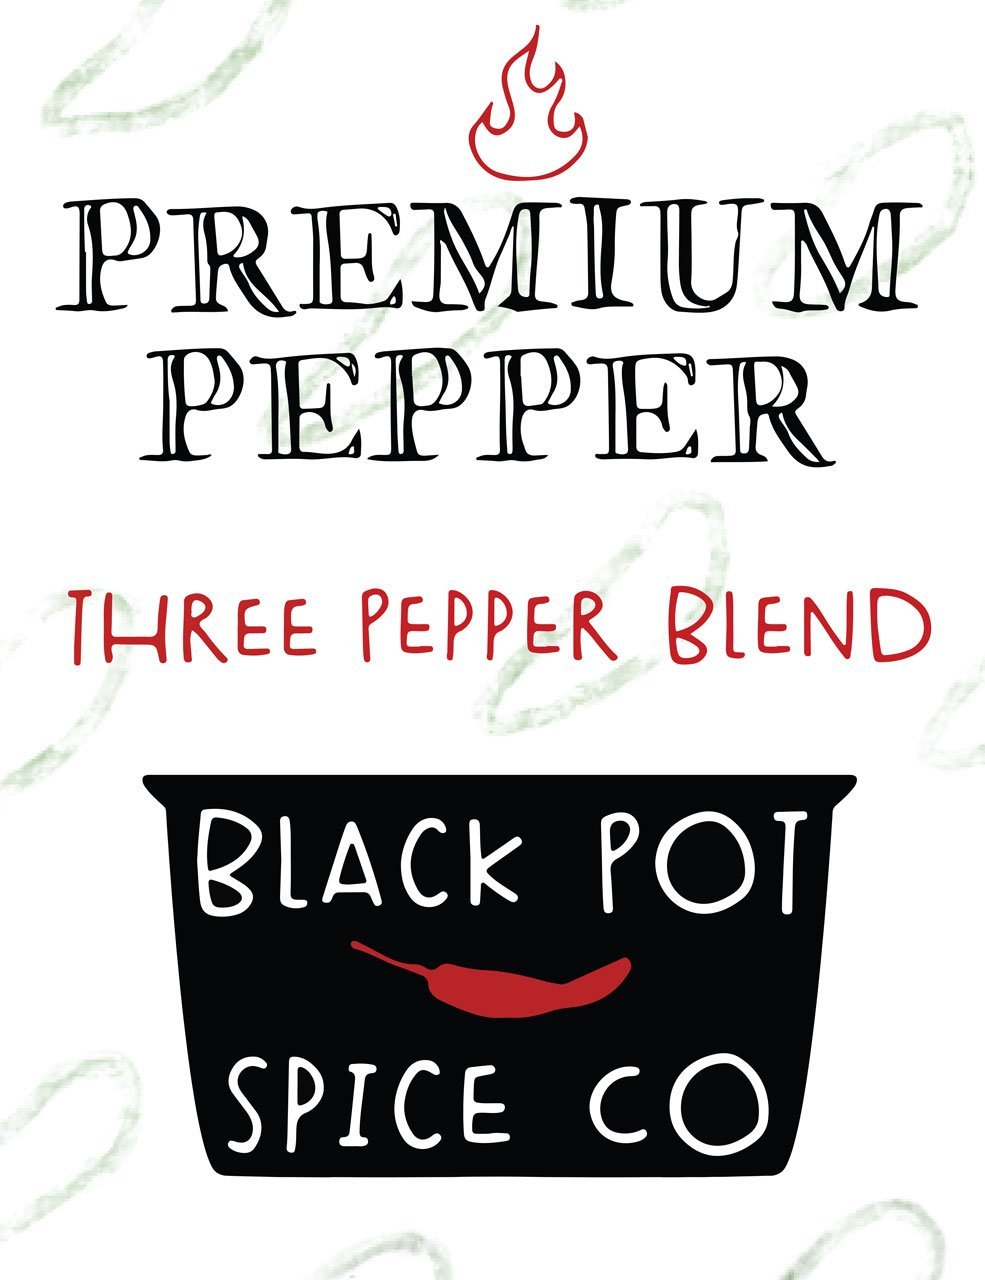 Black Pot Spice Co.- Premium Pepper